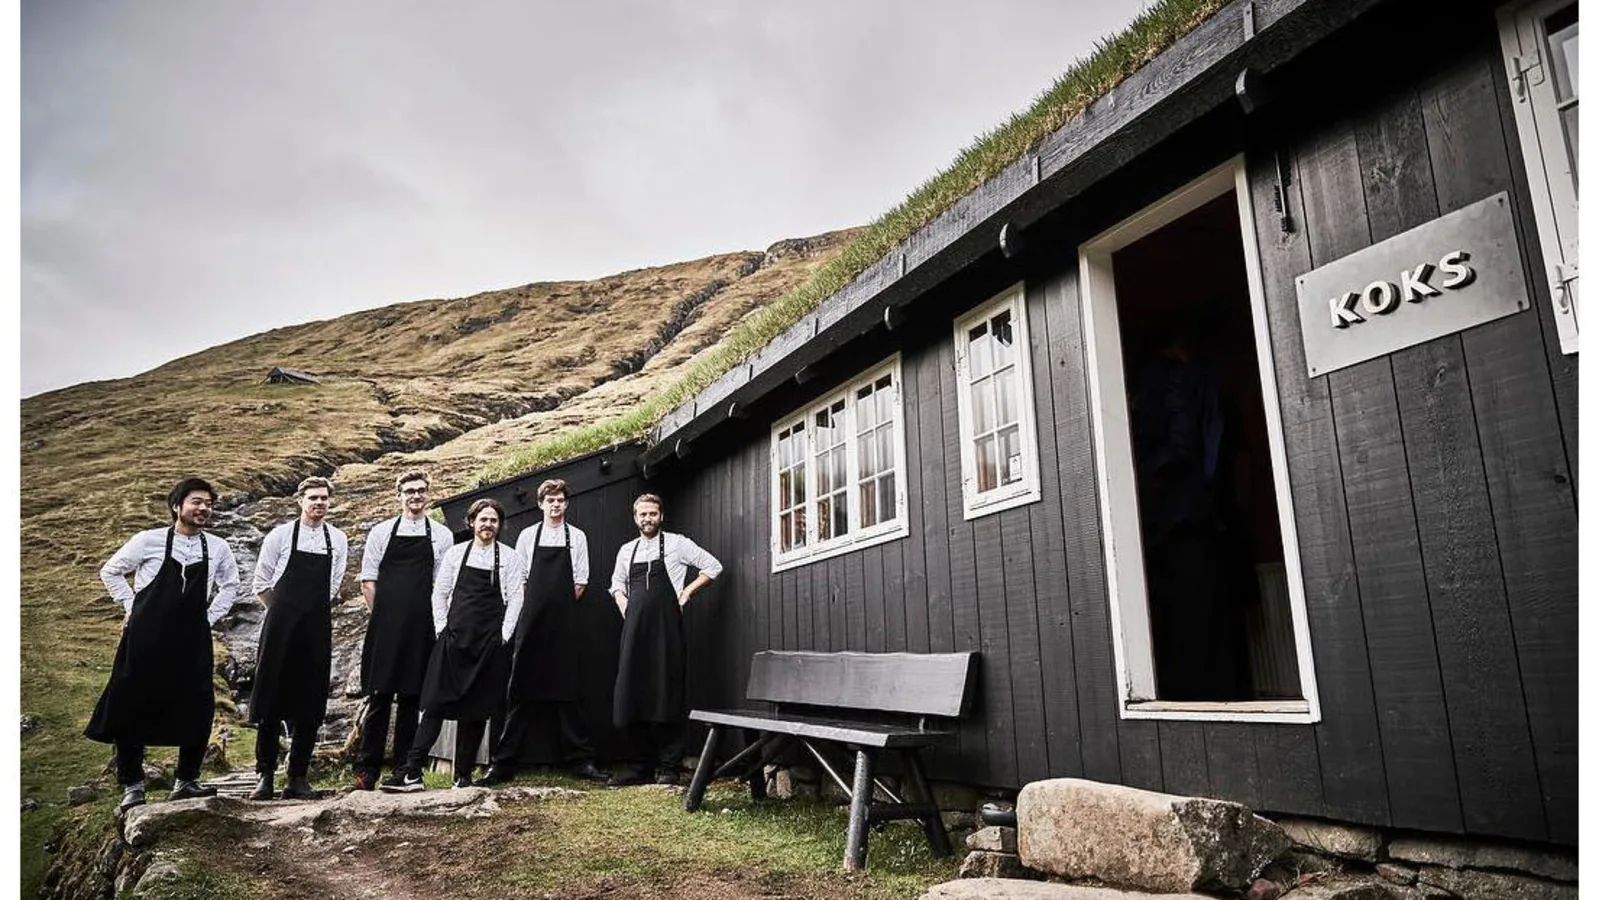 World’s most remote Michelin restaurant, Koks, moves to Greenland